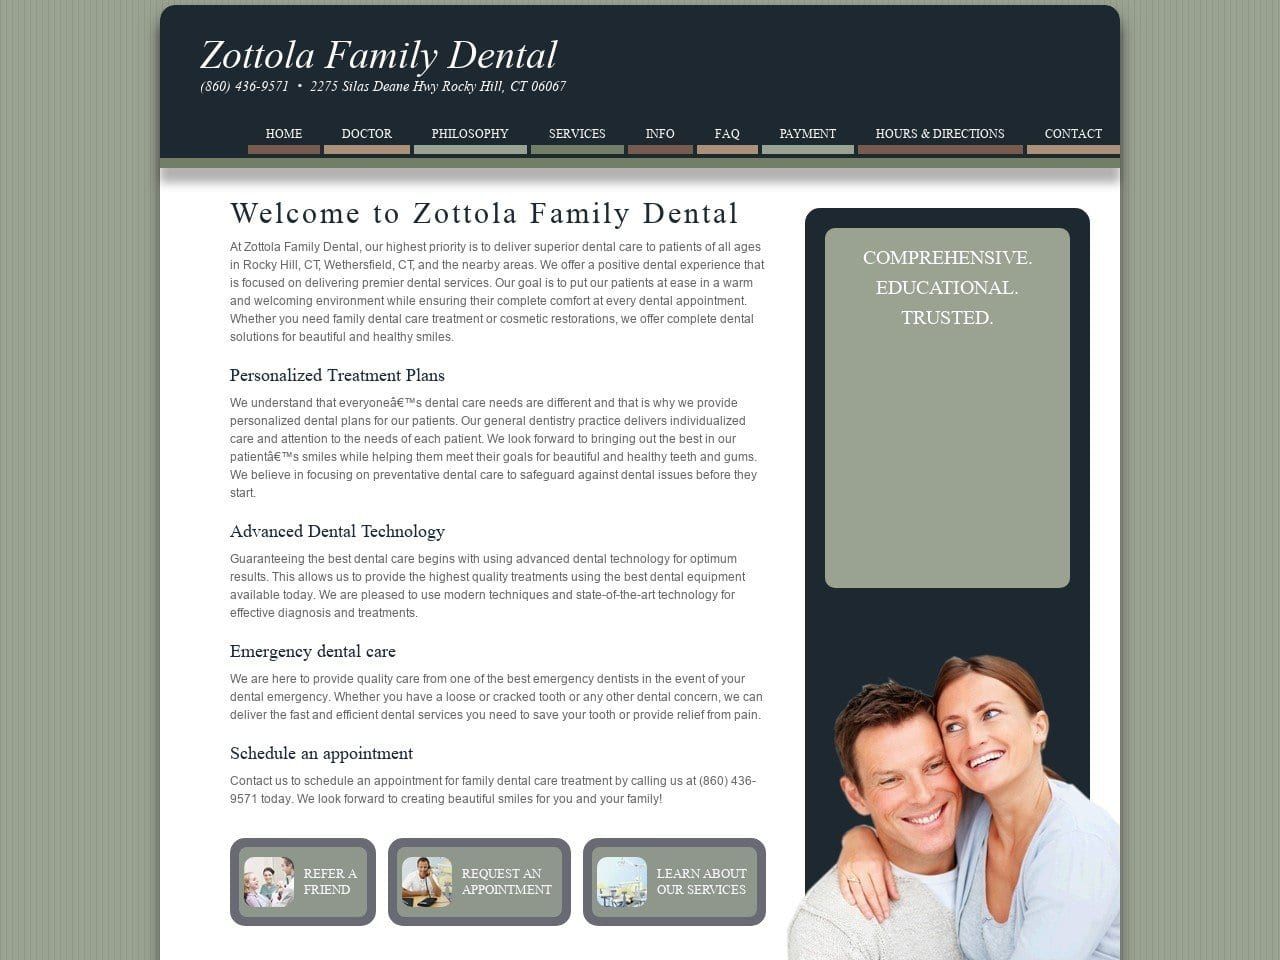 Zottola Periodontal Group Website Screenshot from zfdental.biz